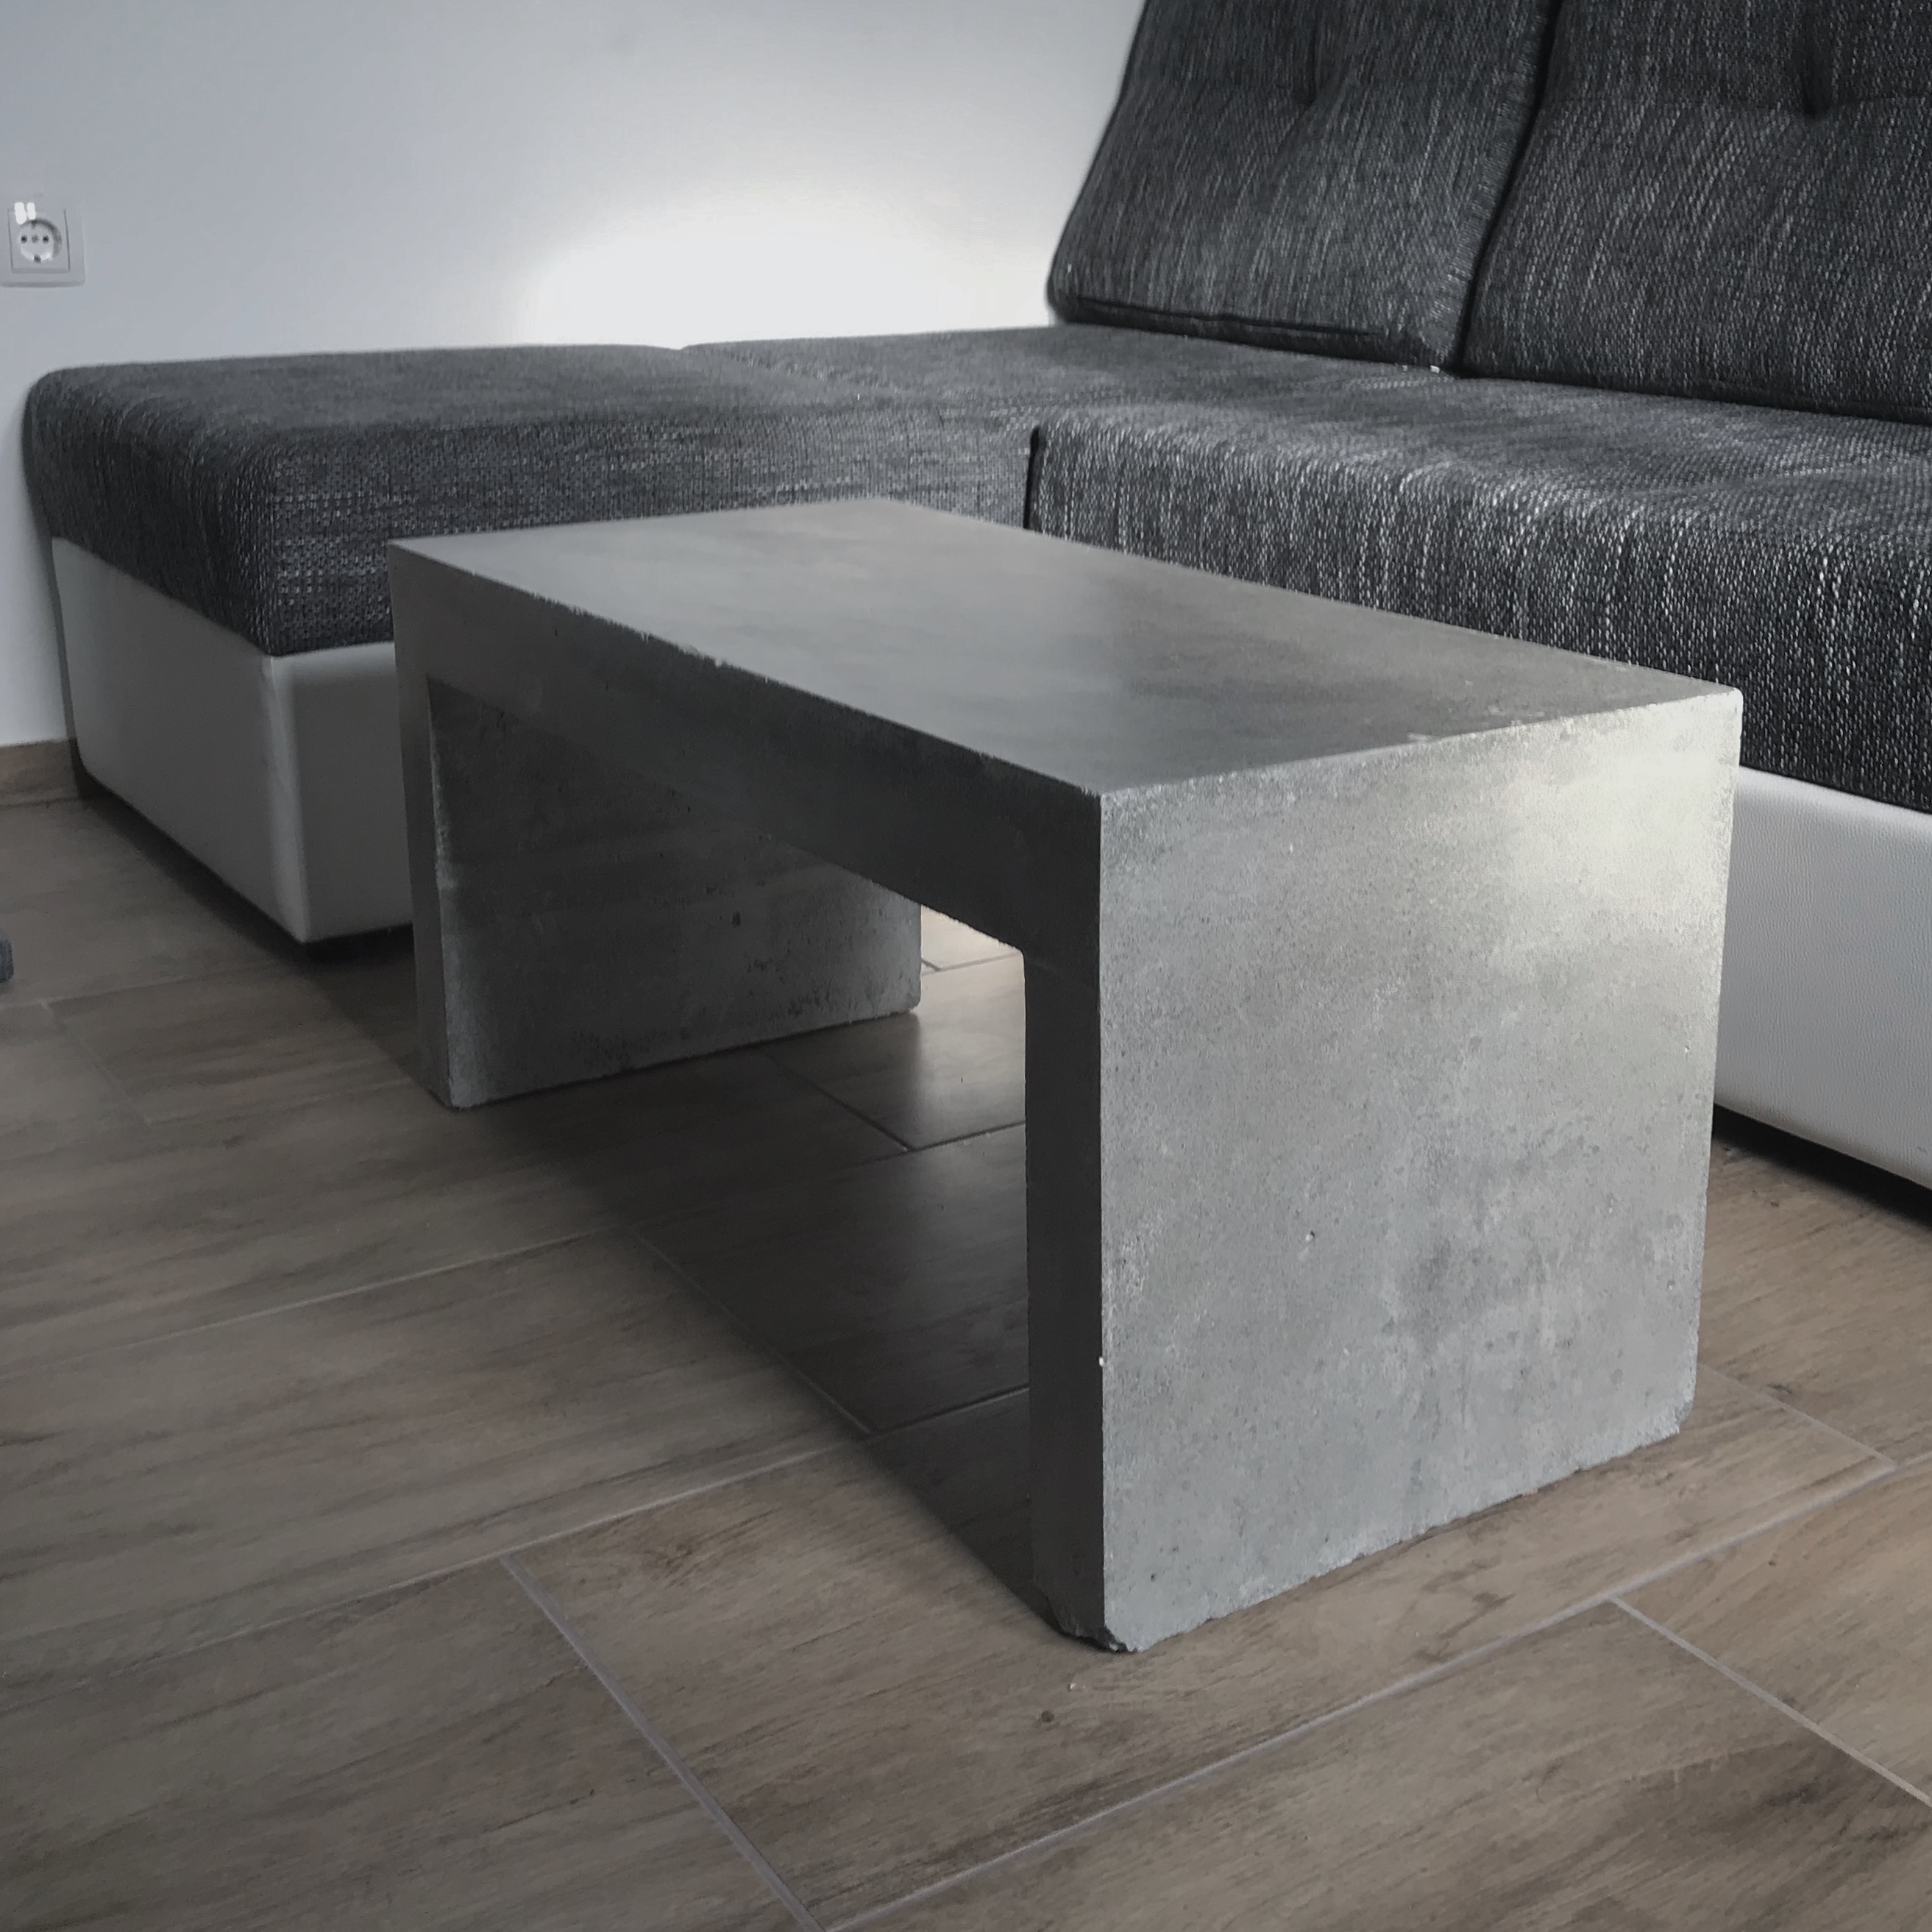 Diy Polished Concrete Coffee Table - Diy Concrete Outdoor Coffee Table